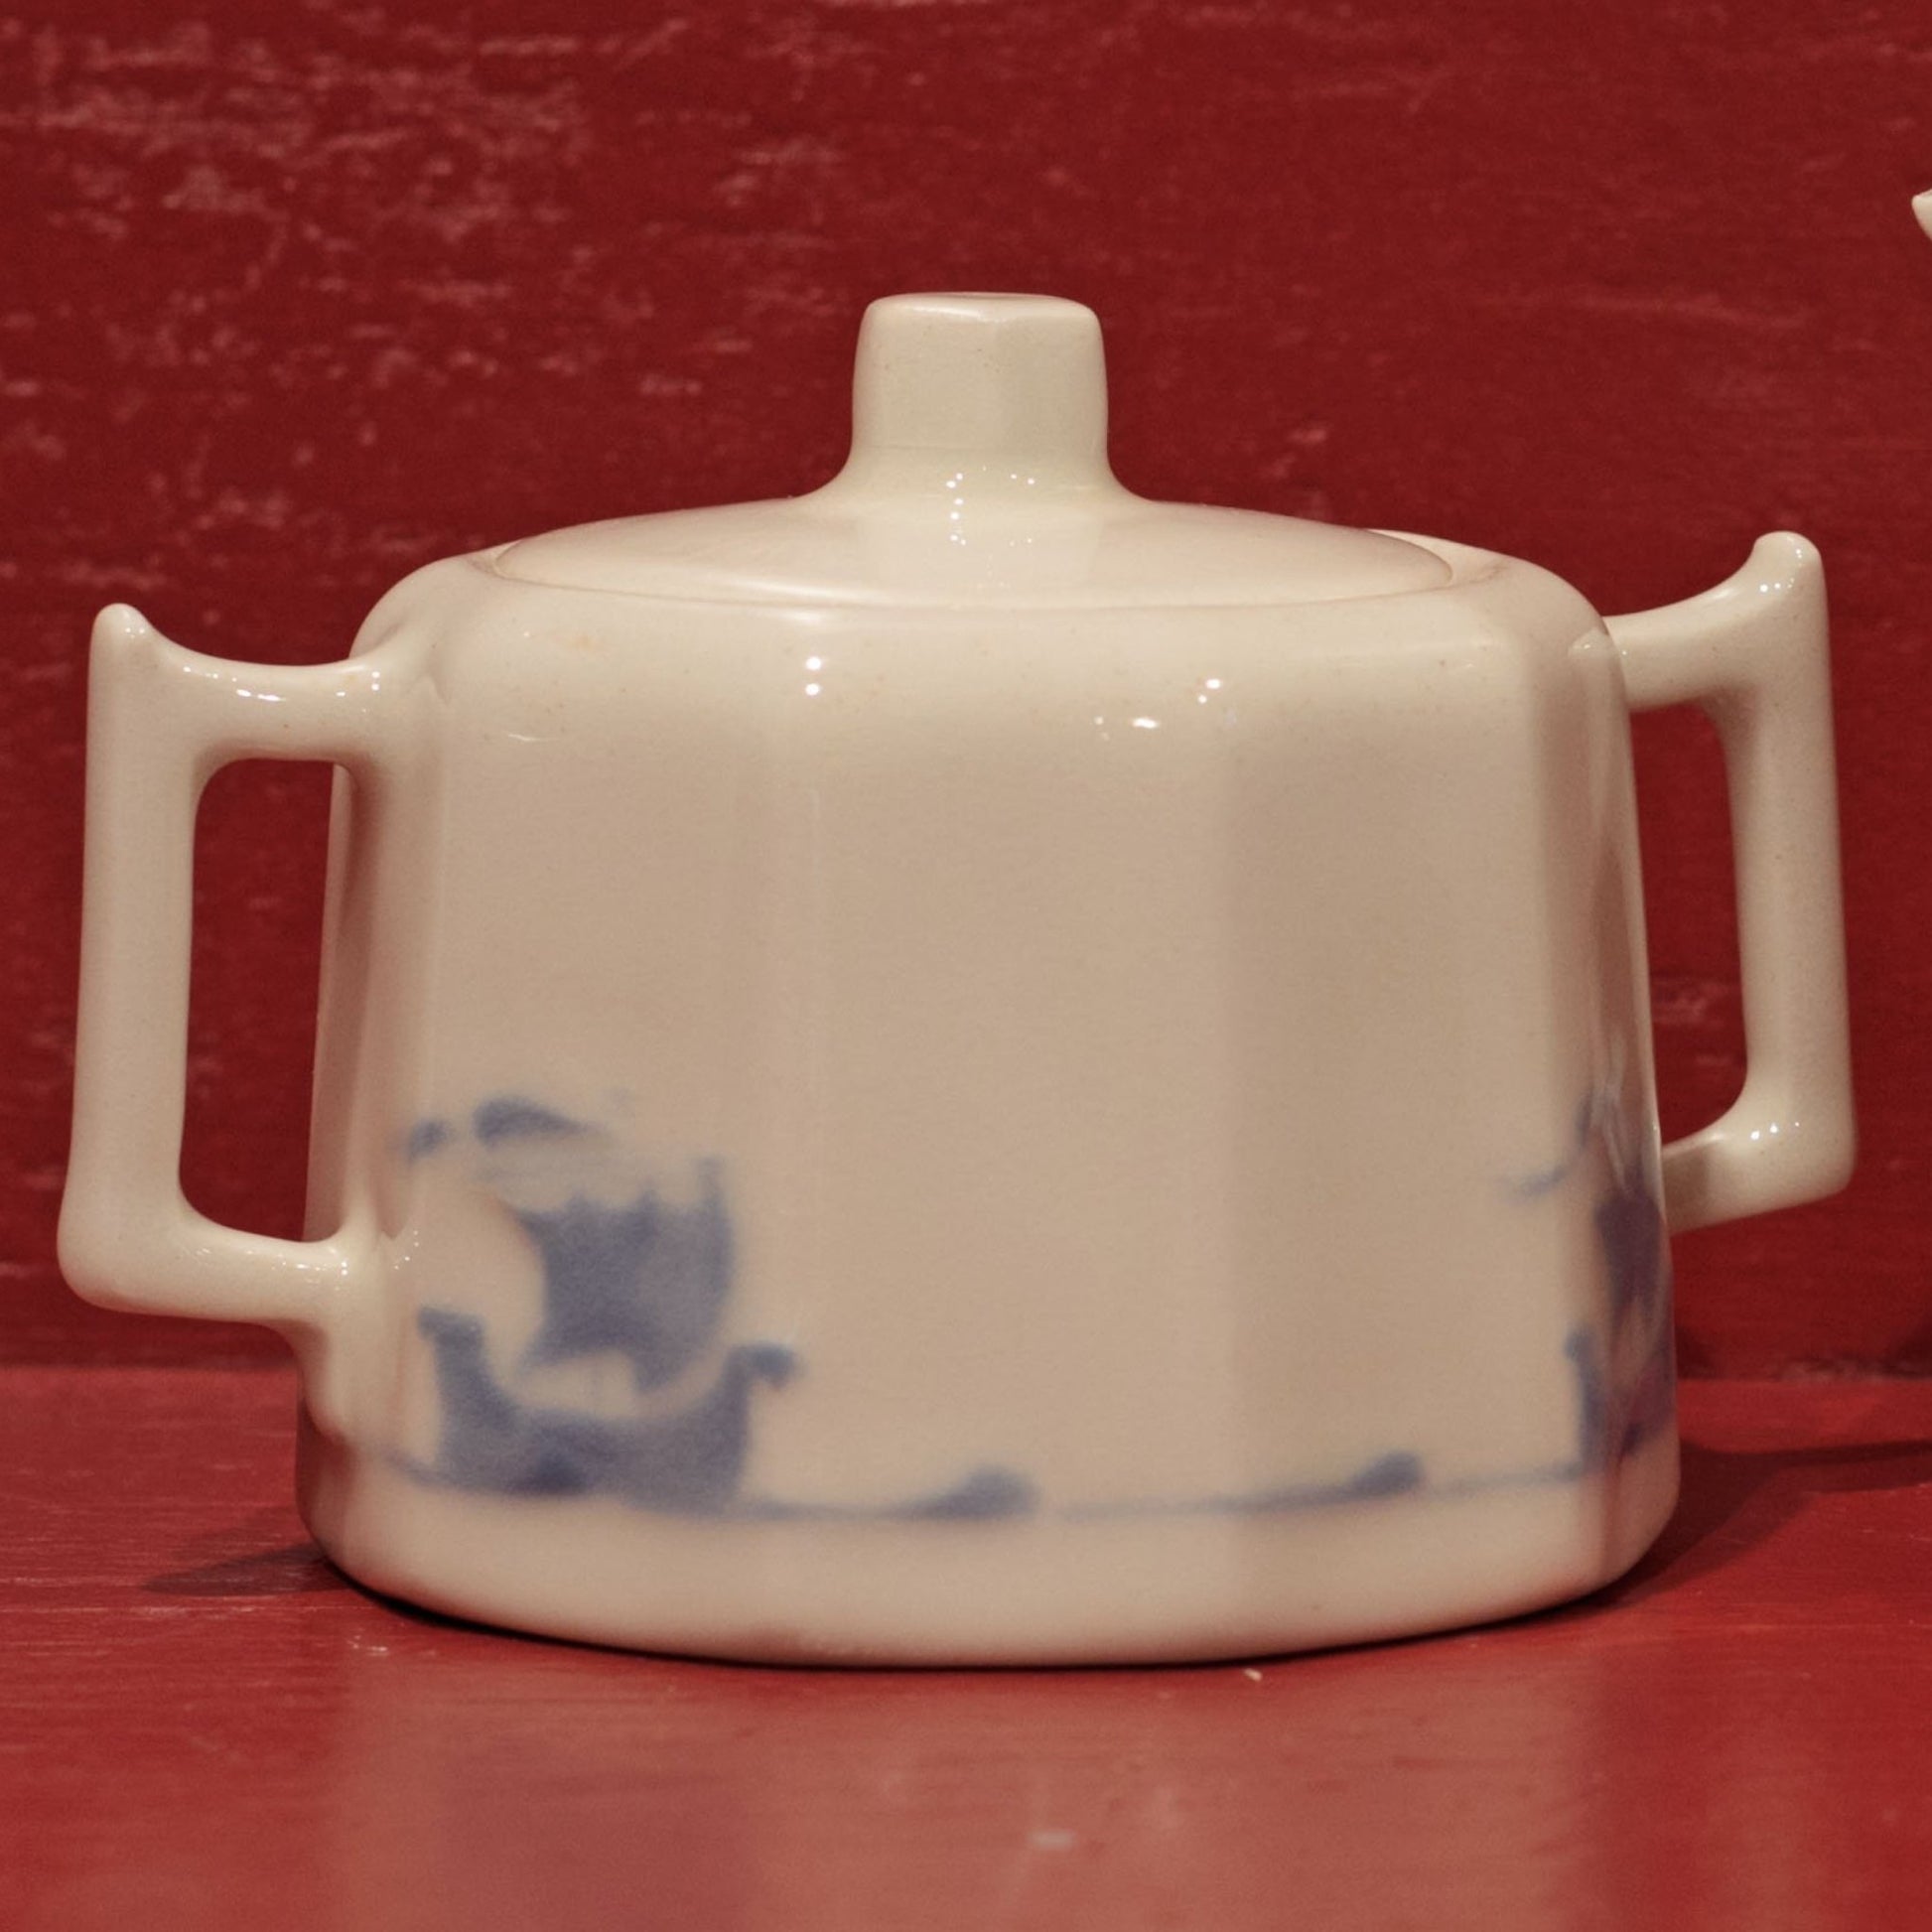 BLUE SAILING SHIPS TEA SET by Rookwood Pottery Cincinnati Ohio Includes Teapot, Creamer and Covered Sugar